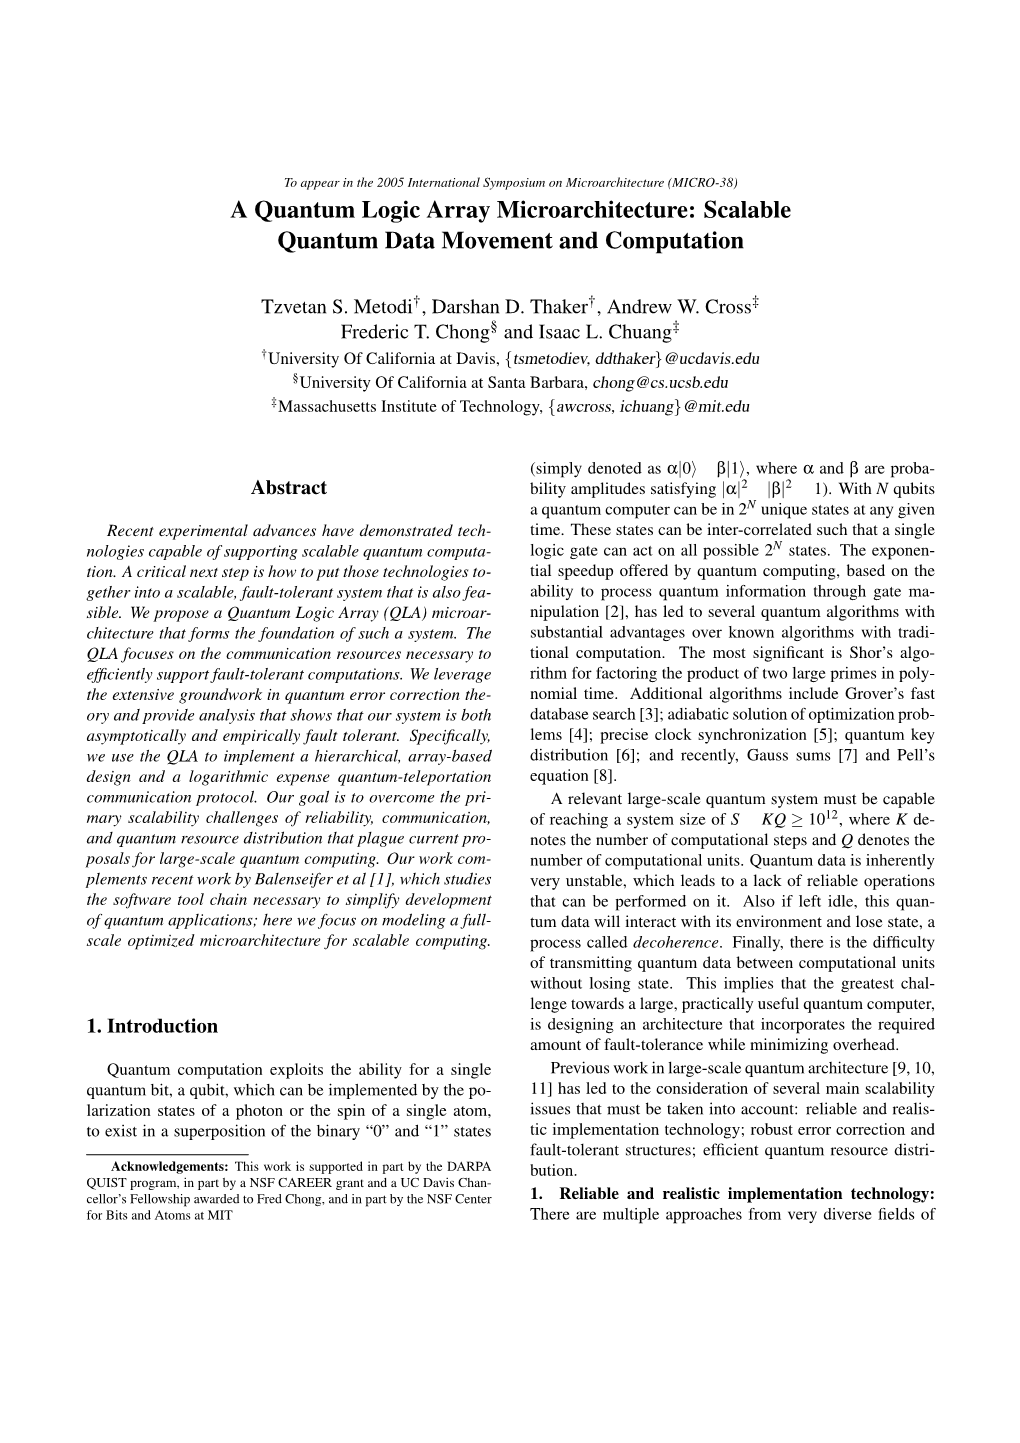 A Quantum Logic Array Microarchitecture: Scalable Quantum Data Movement and Computation